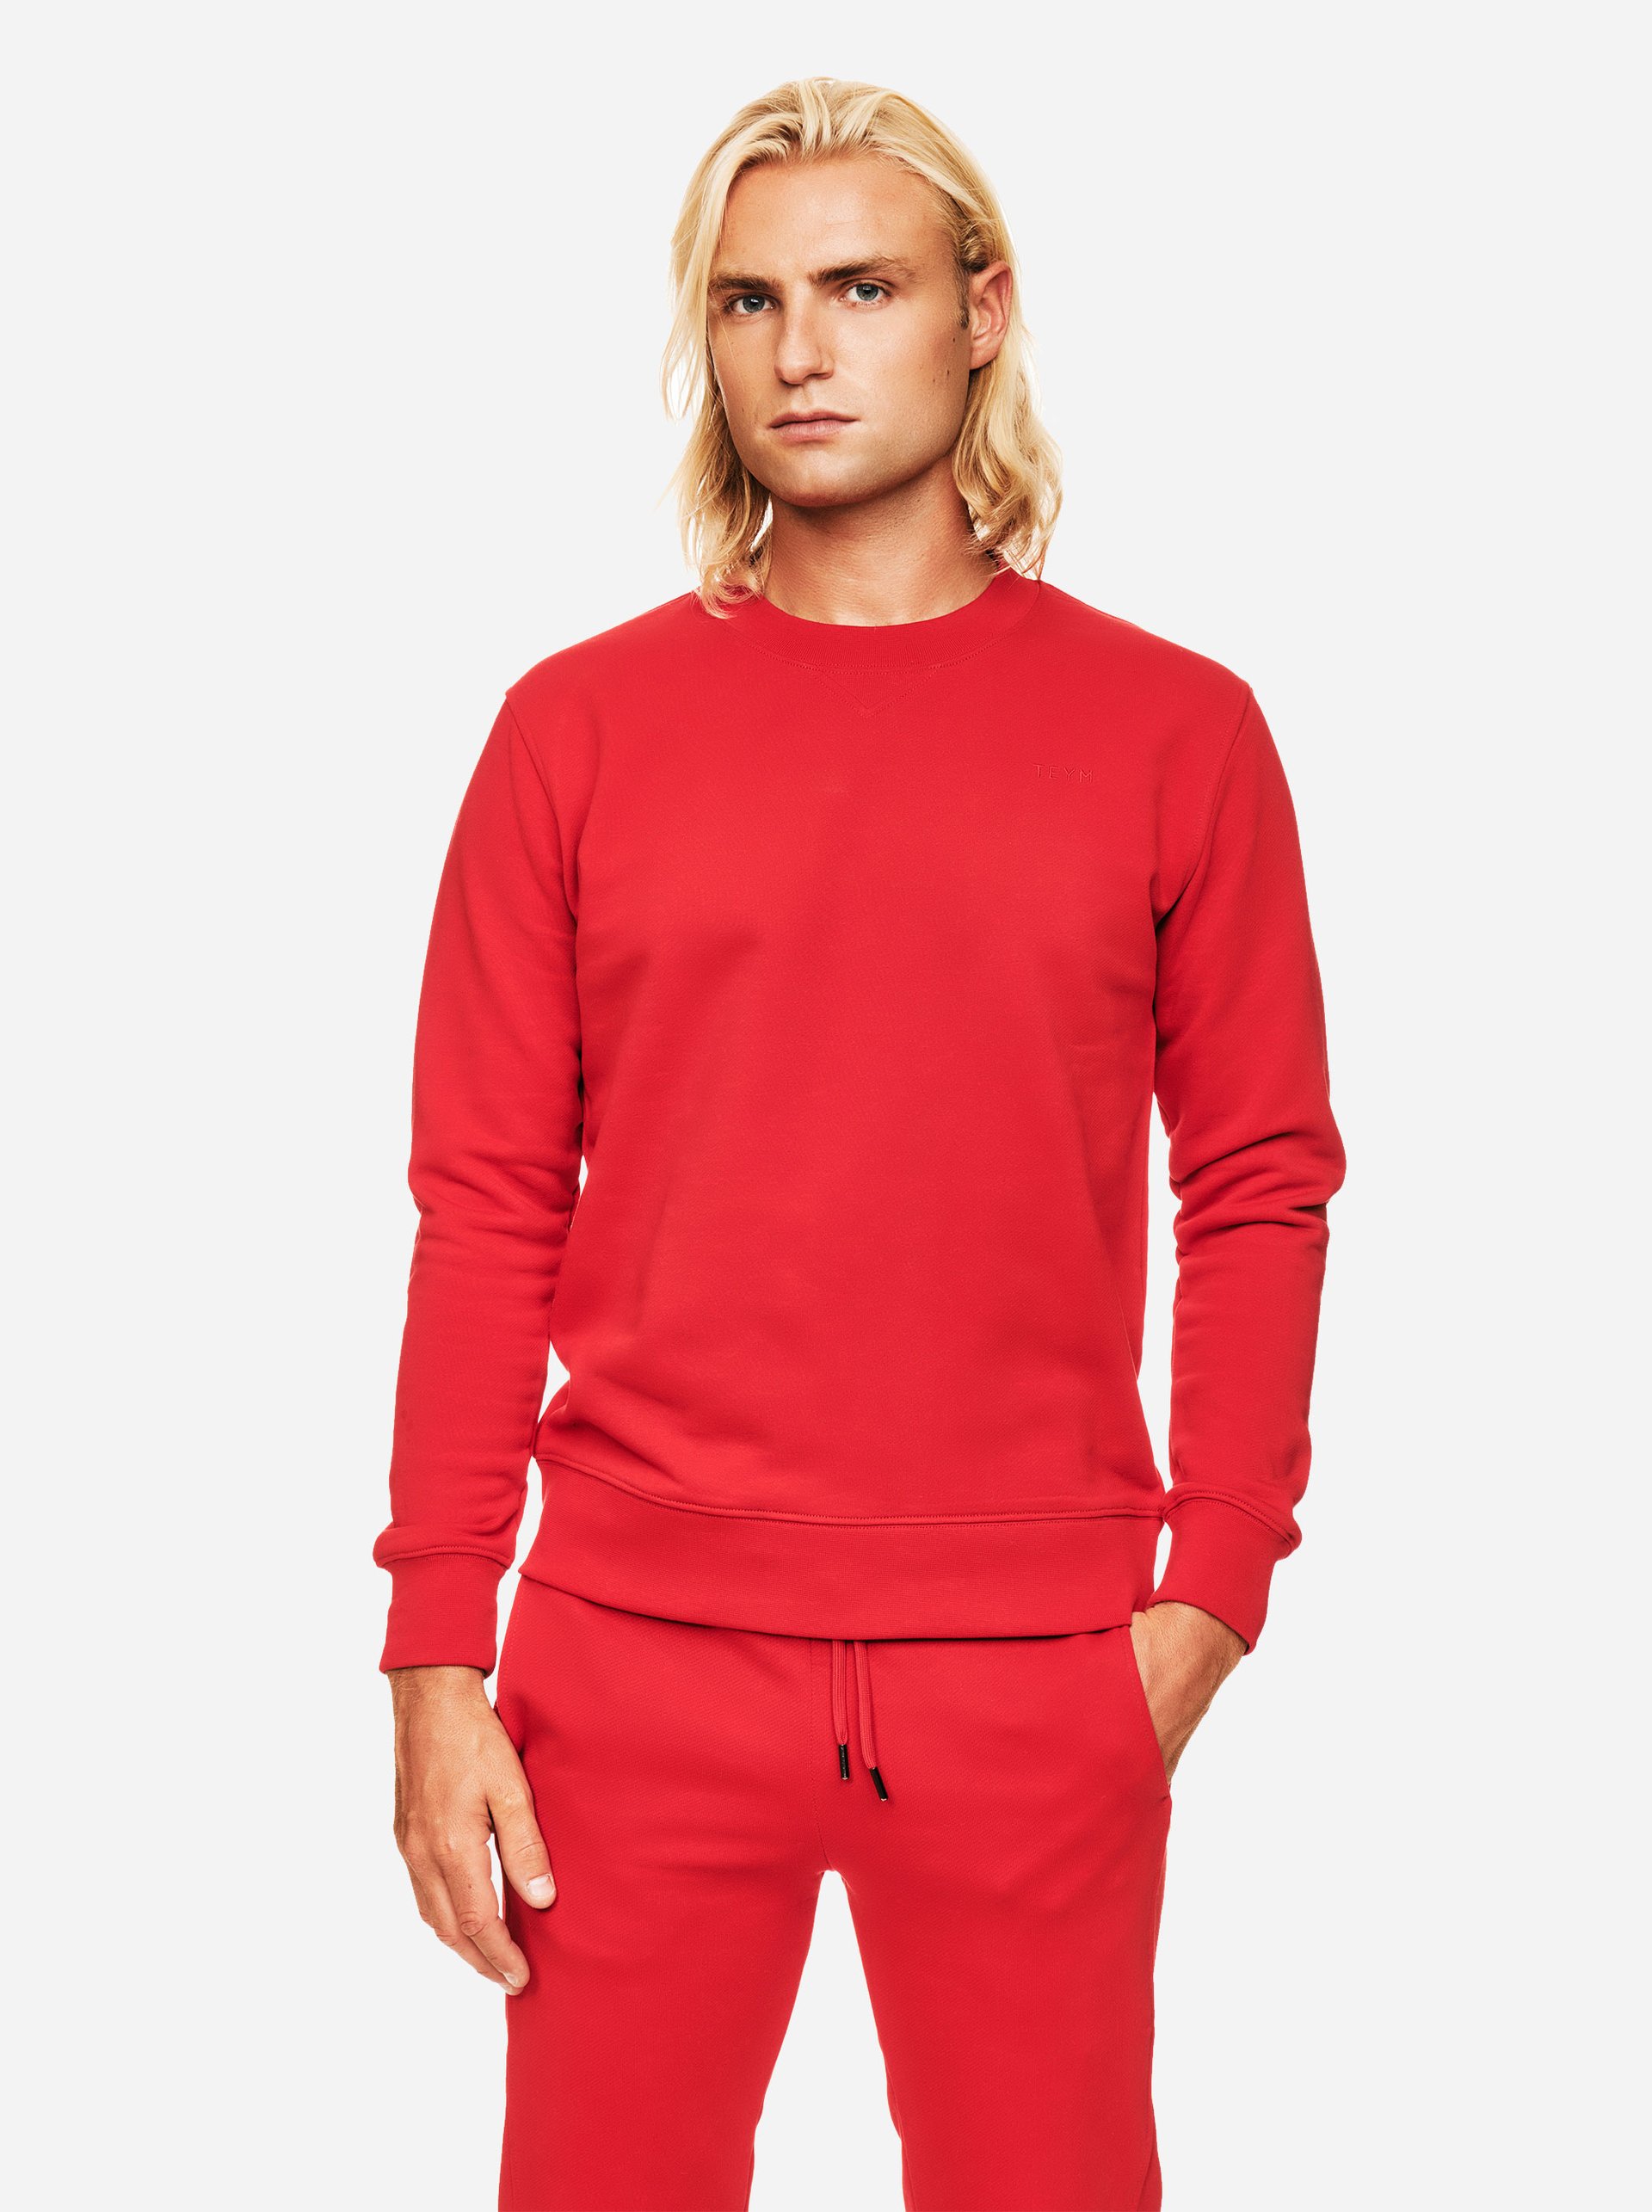 Teym-TheSweatshirt-Men-Red01